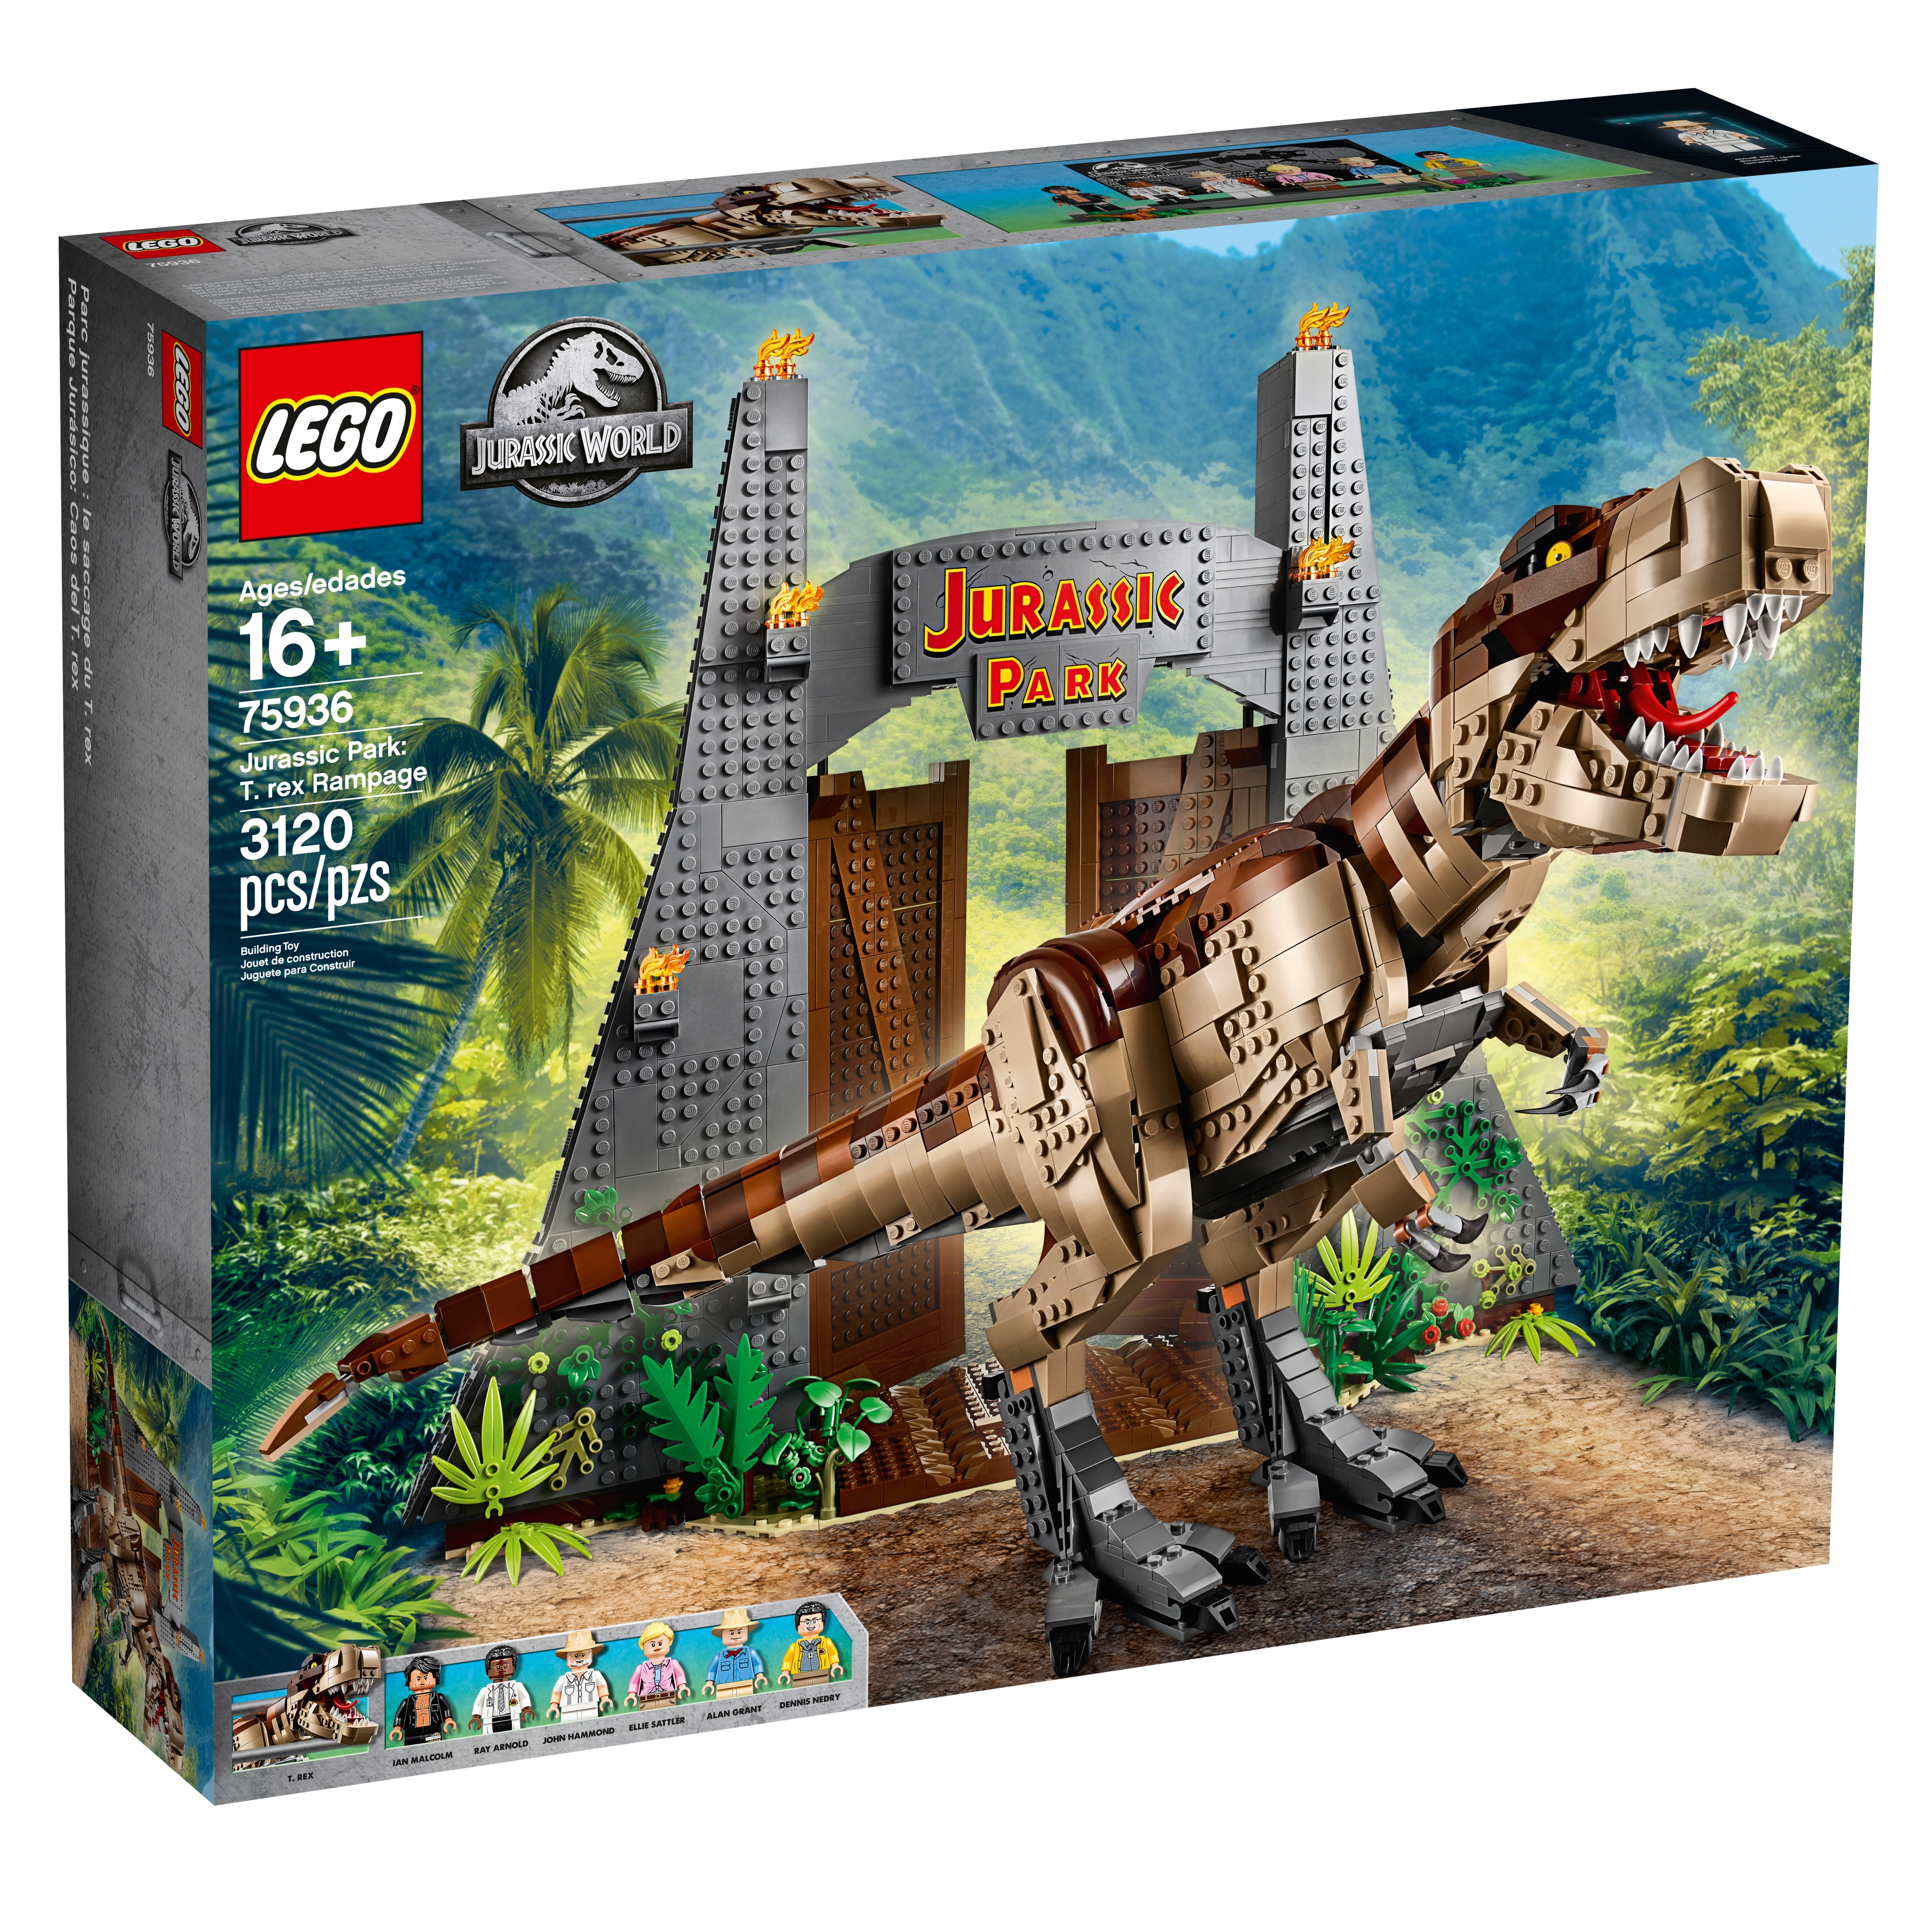 Tyrannosaurus Park Trex fit Jurassic world Lego toy Dinosaurs buy 2 Free Gifts 